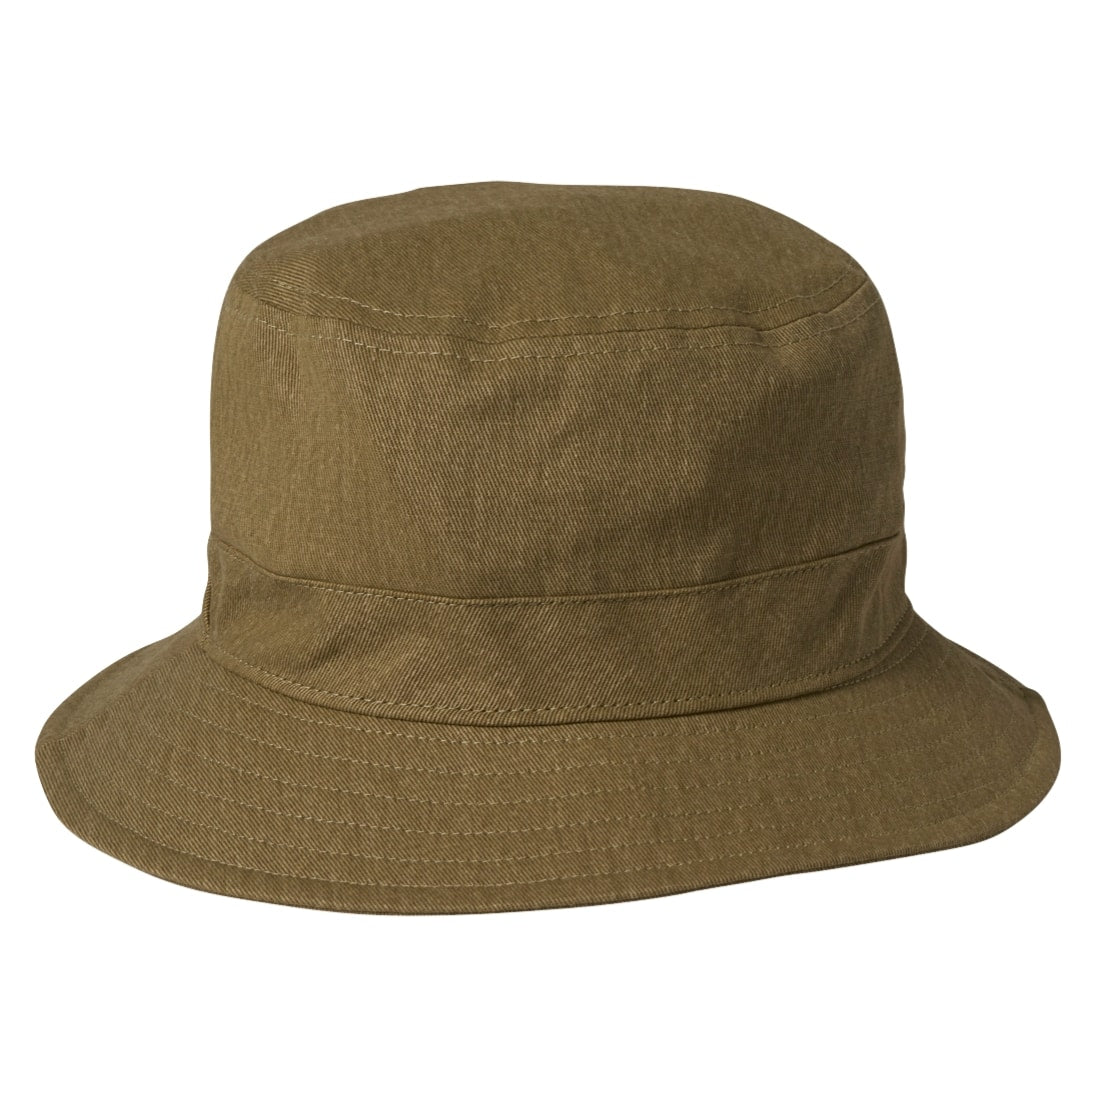 Brixton Woodburn Packable Bucket Hat - Sand Sol Wash - Bucket Hat by Brixton